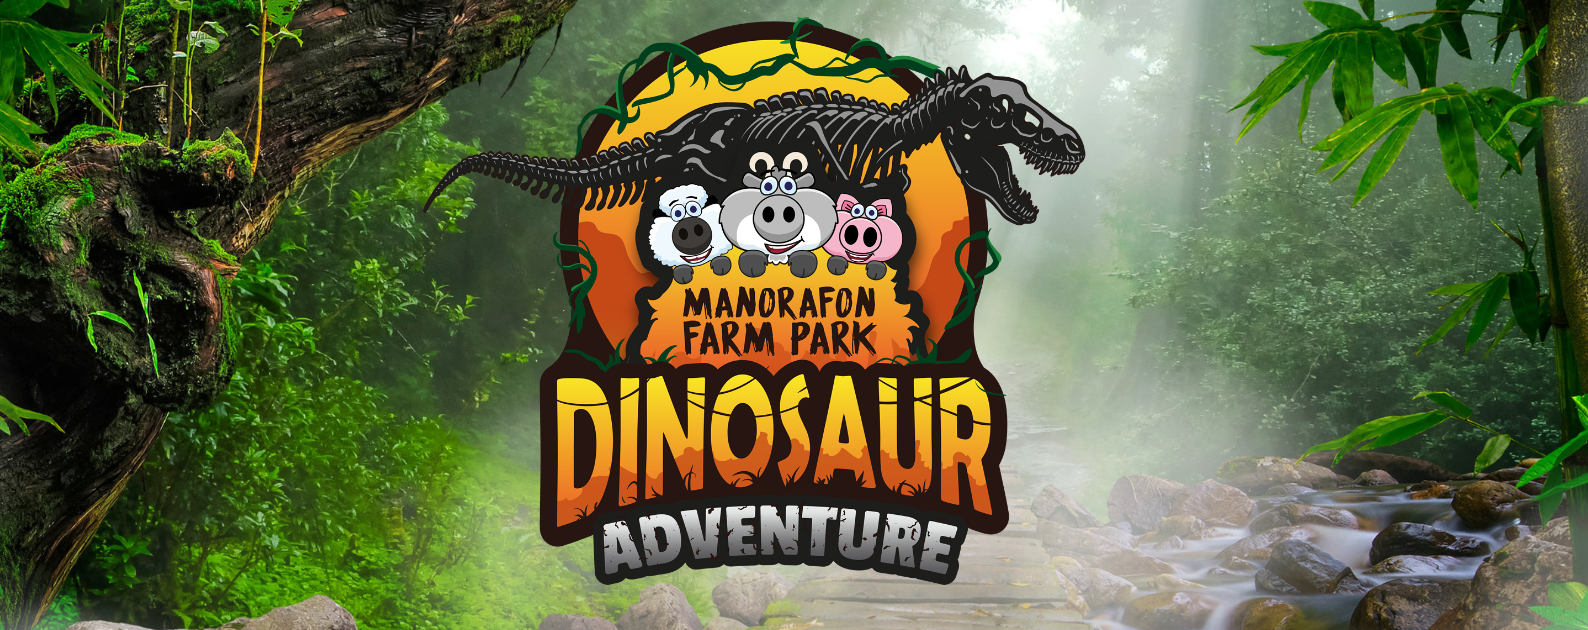 manorafon farm park dinosaur adventure